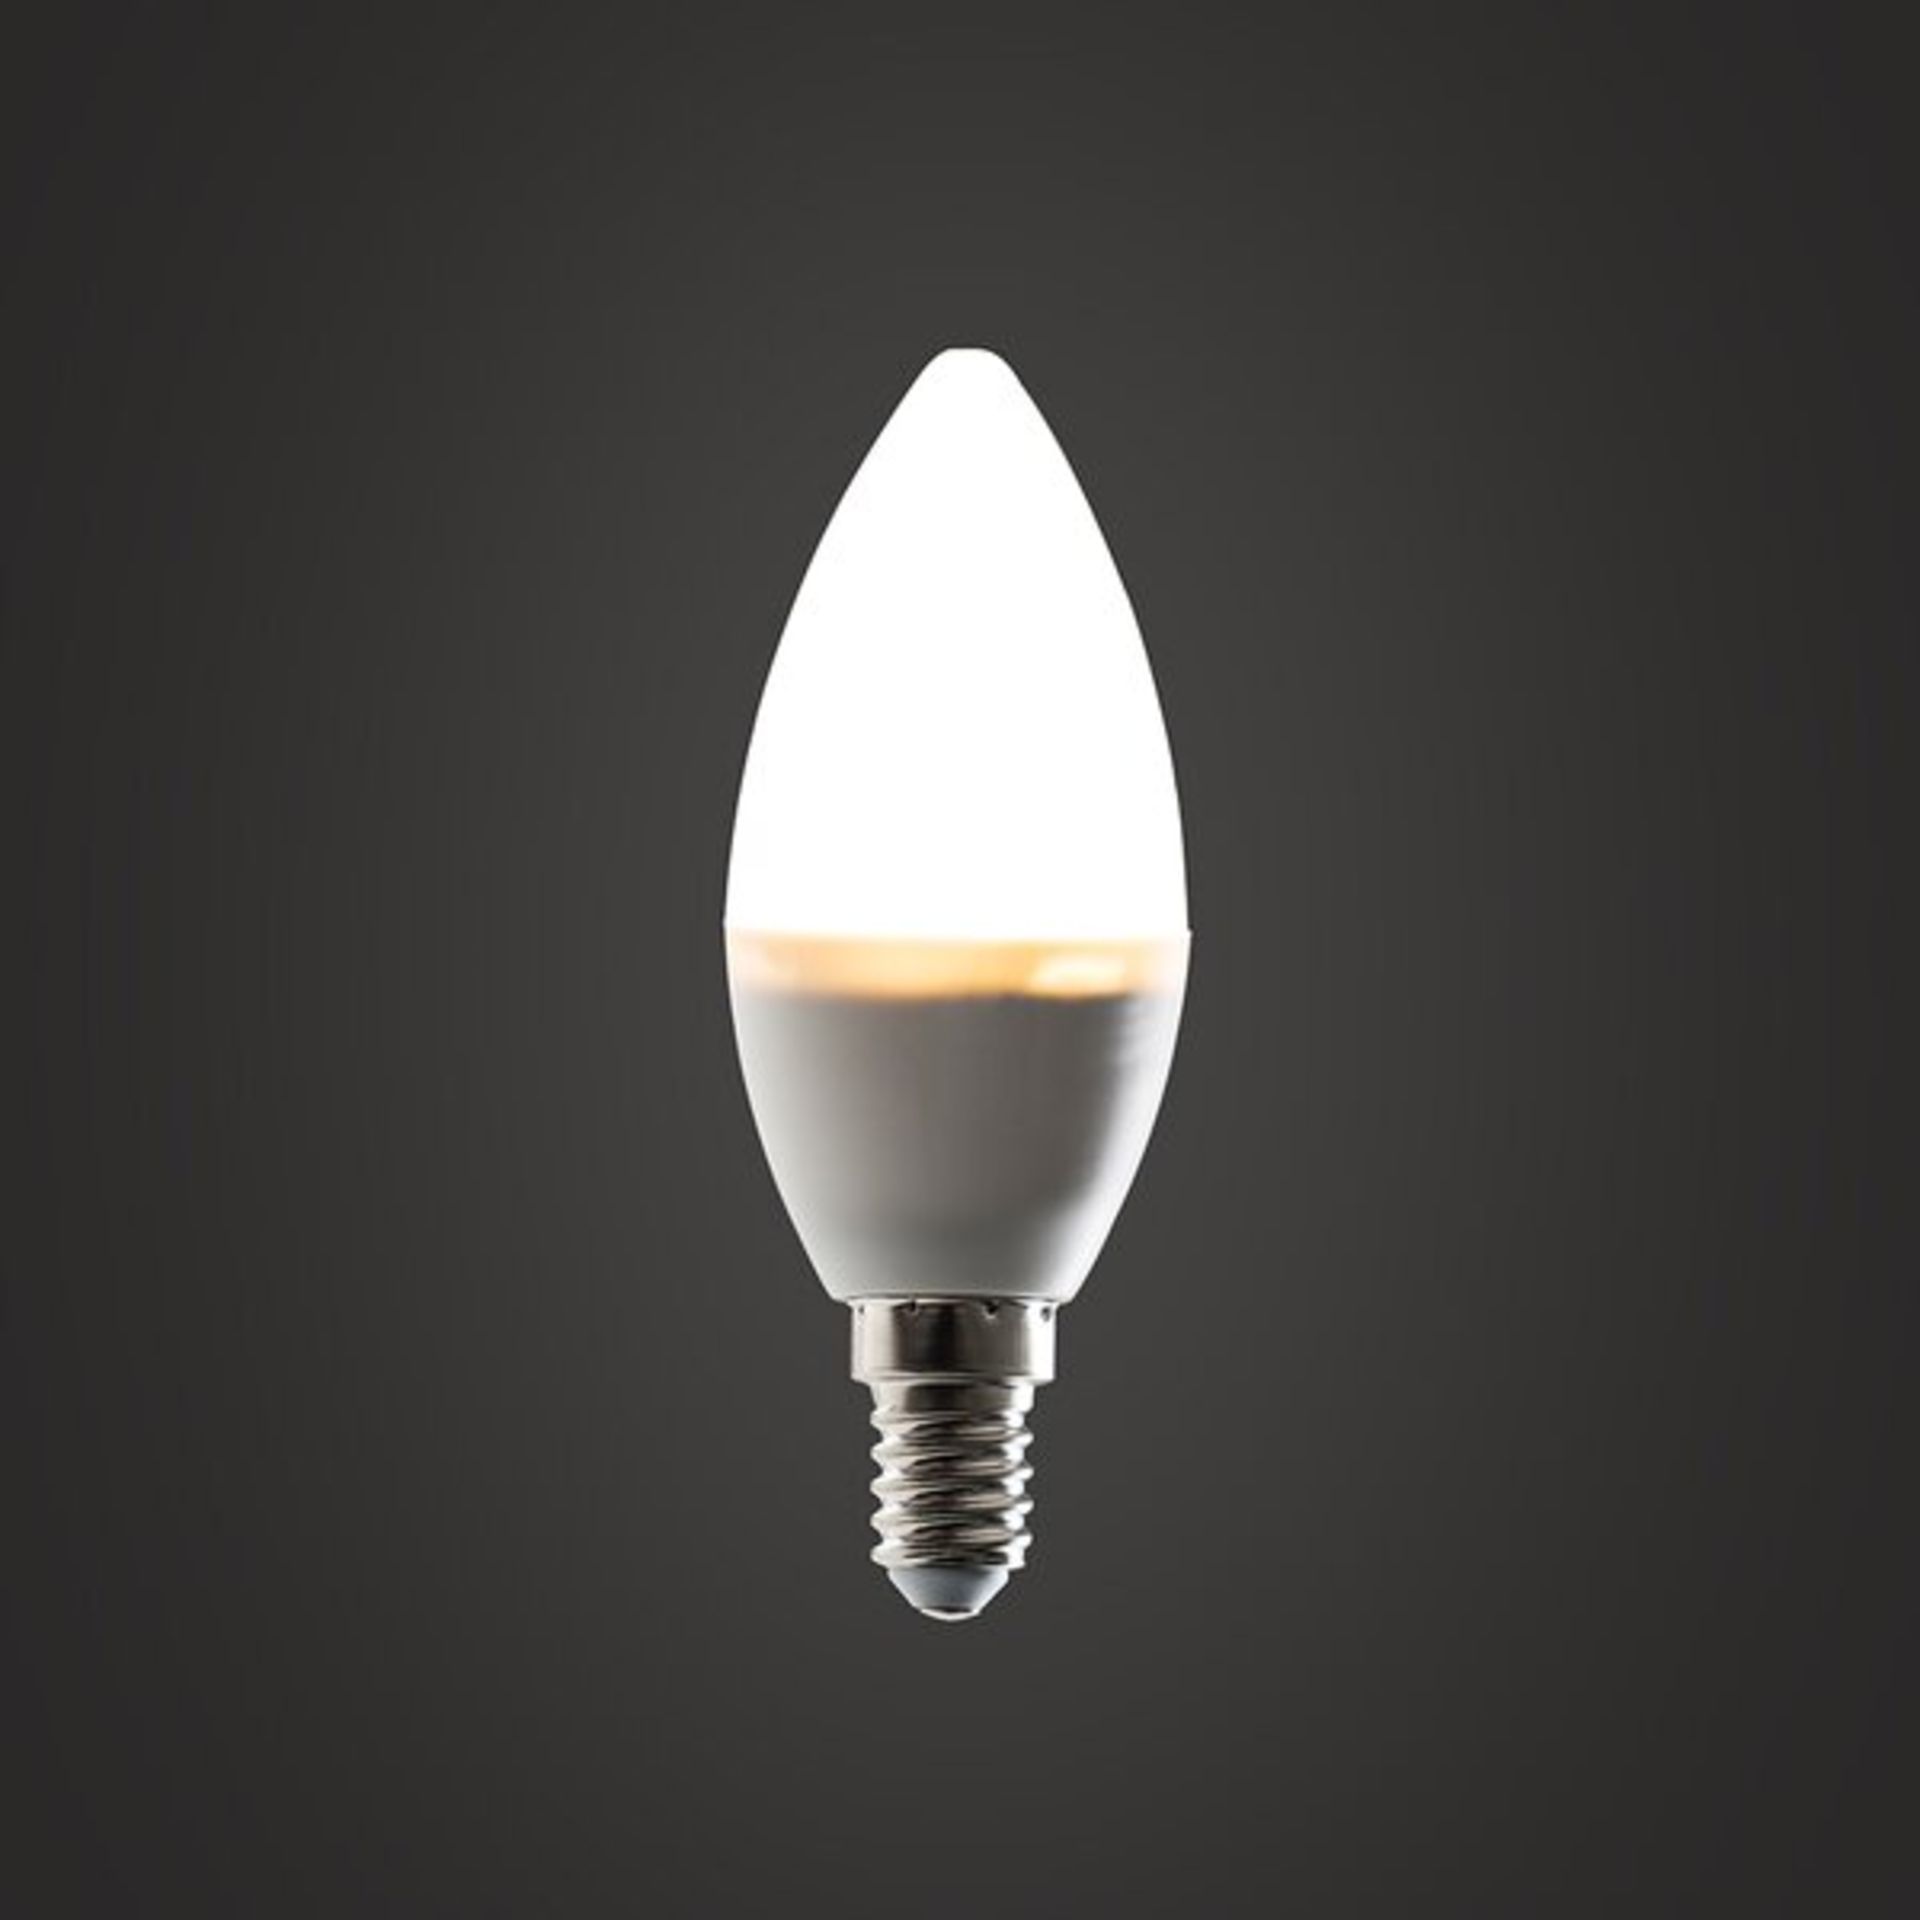 3 x MiniSun 4W E14 LED Candle Light Bulbs - Frosted